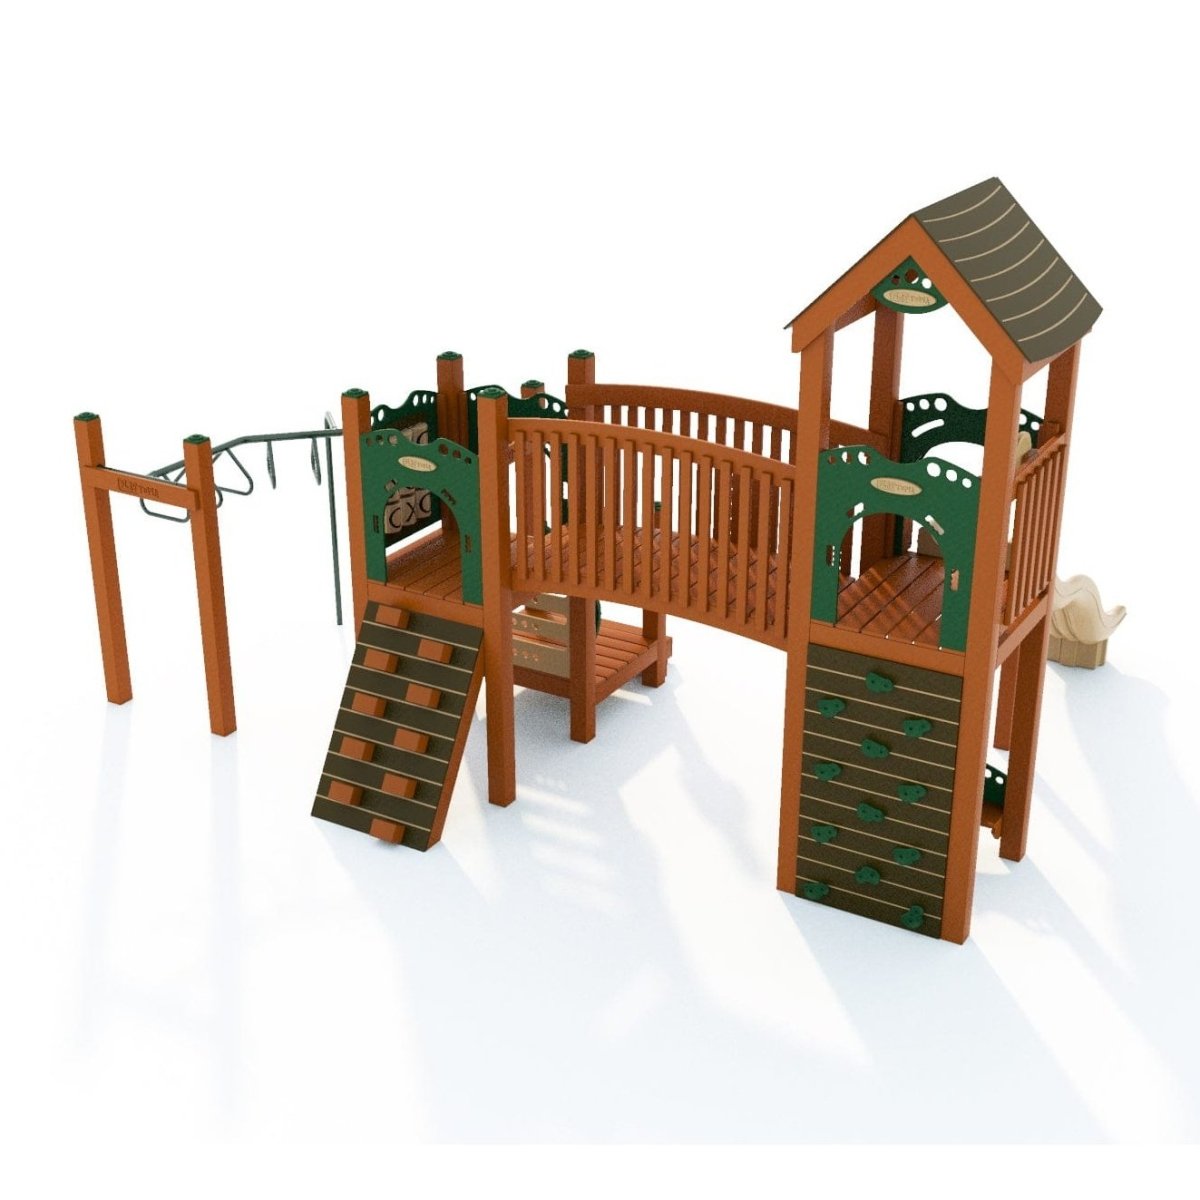 Brooks Playset - School-Age Playgrounds - Playtopia, Inc.